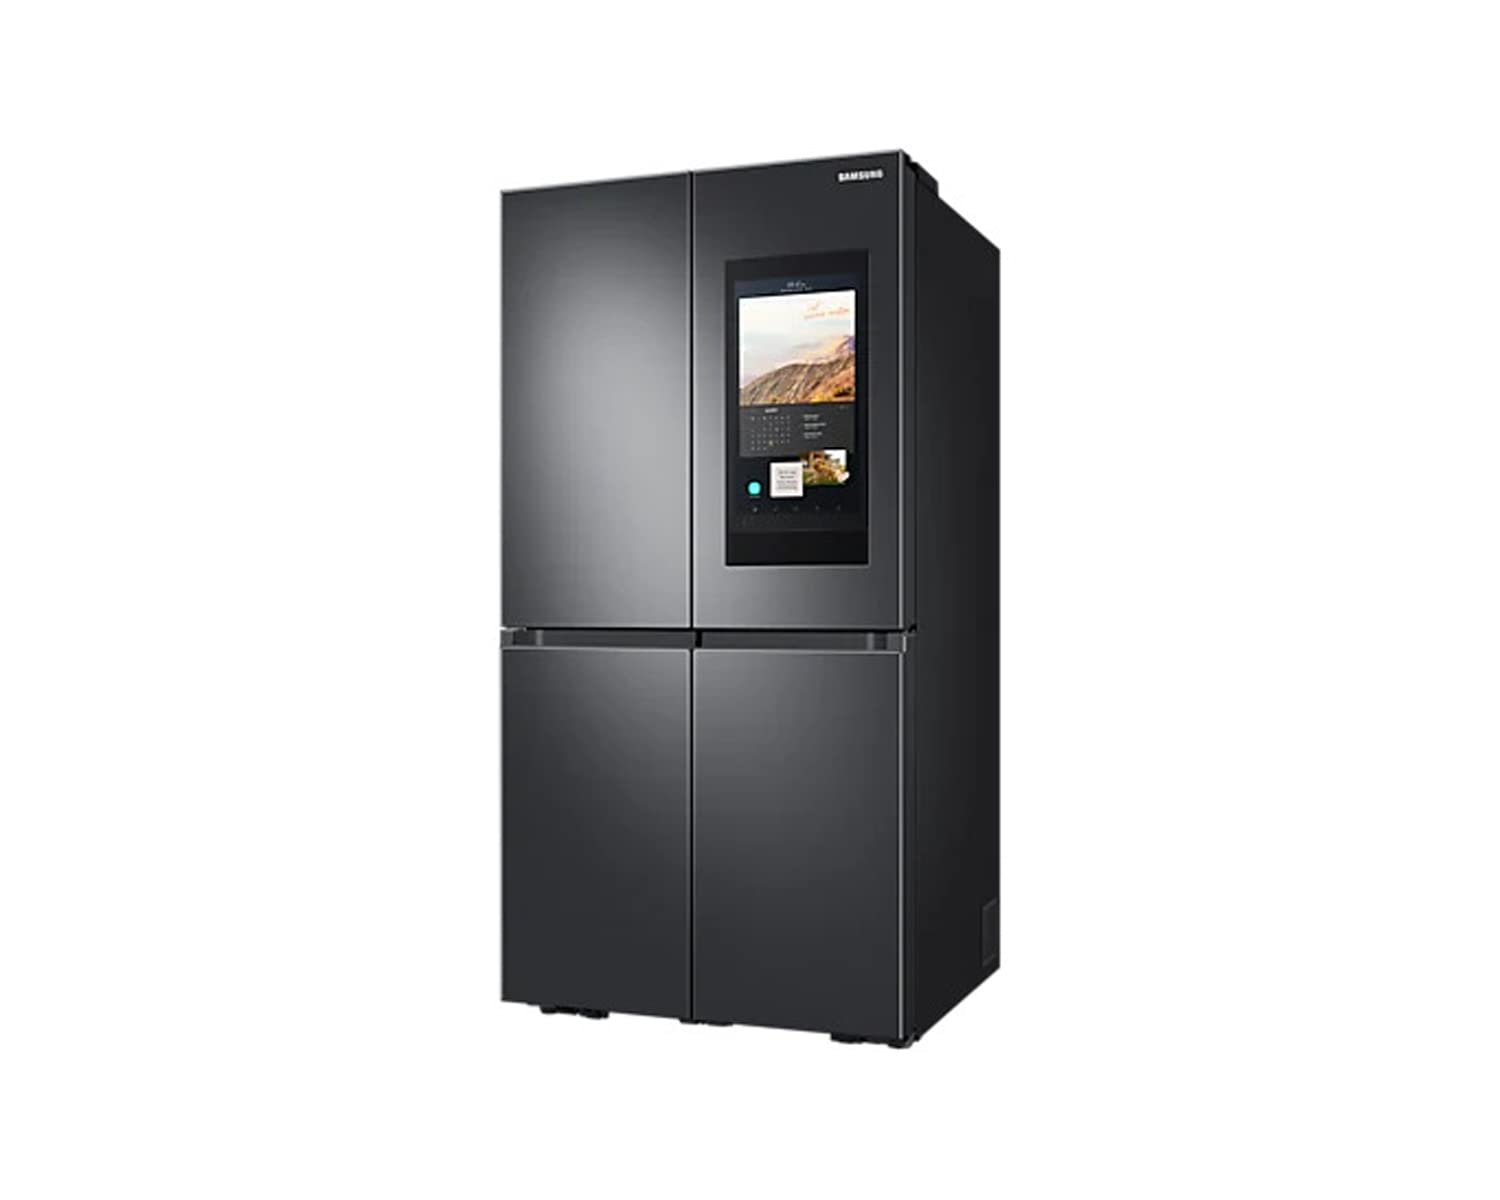 Samsung 865 ltrs 4-Door Flex Inverter Side By Side Refrigerator (RF87A9770SG, BLACK CAVIAR)